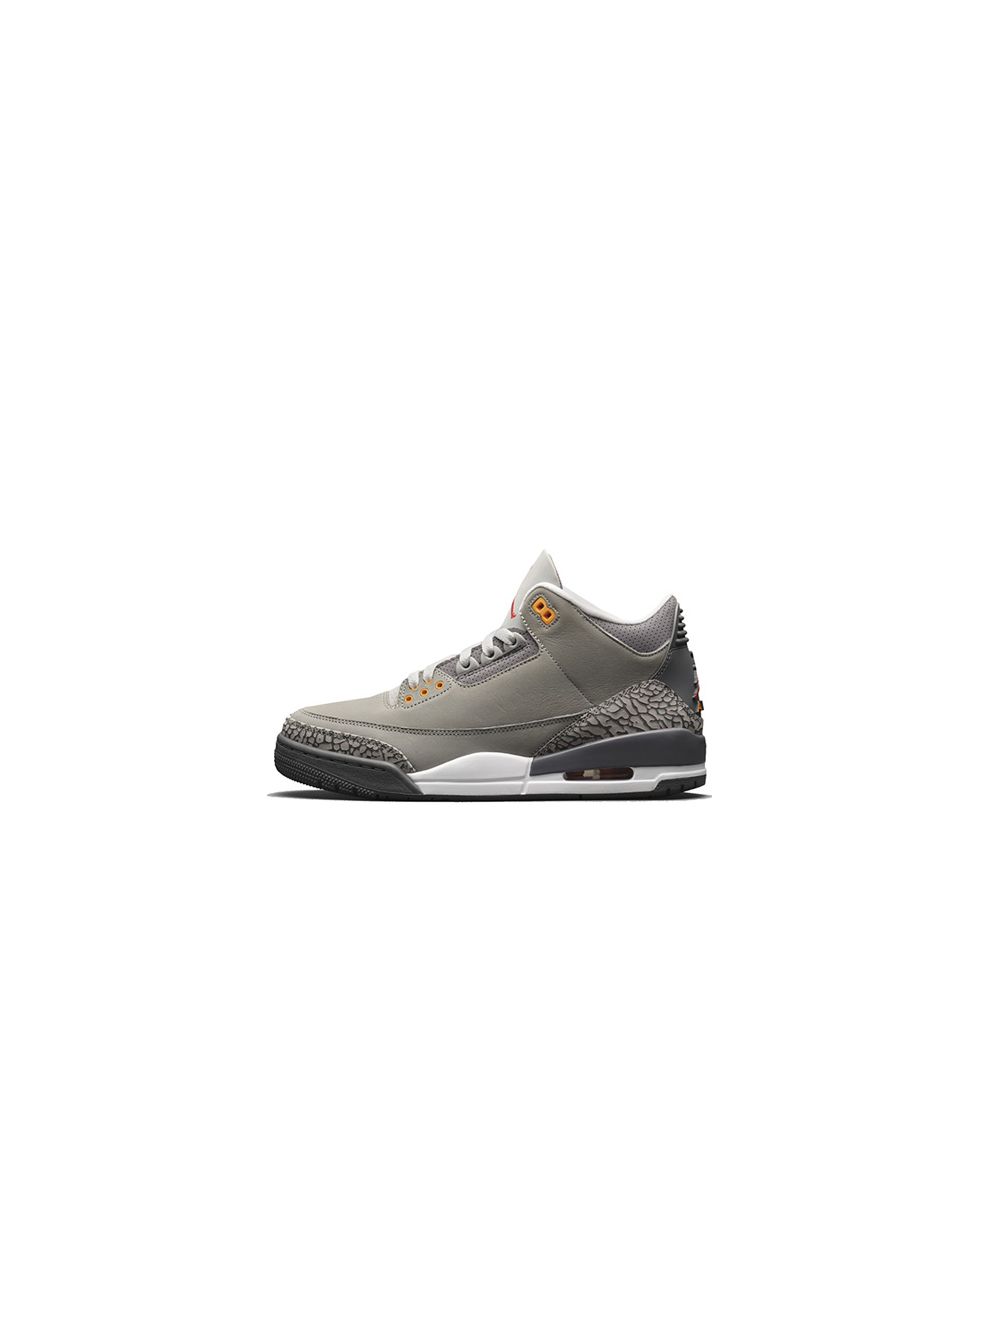 aa Fake Jordan 3 Retro Cool Grey 21 For Sale Online Popkicks Org